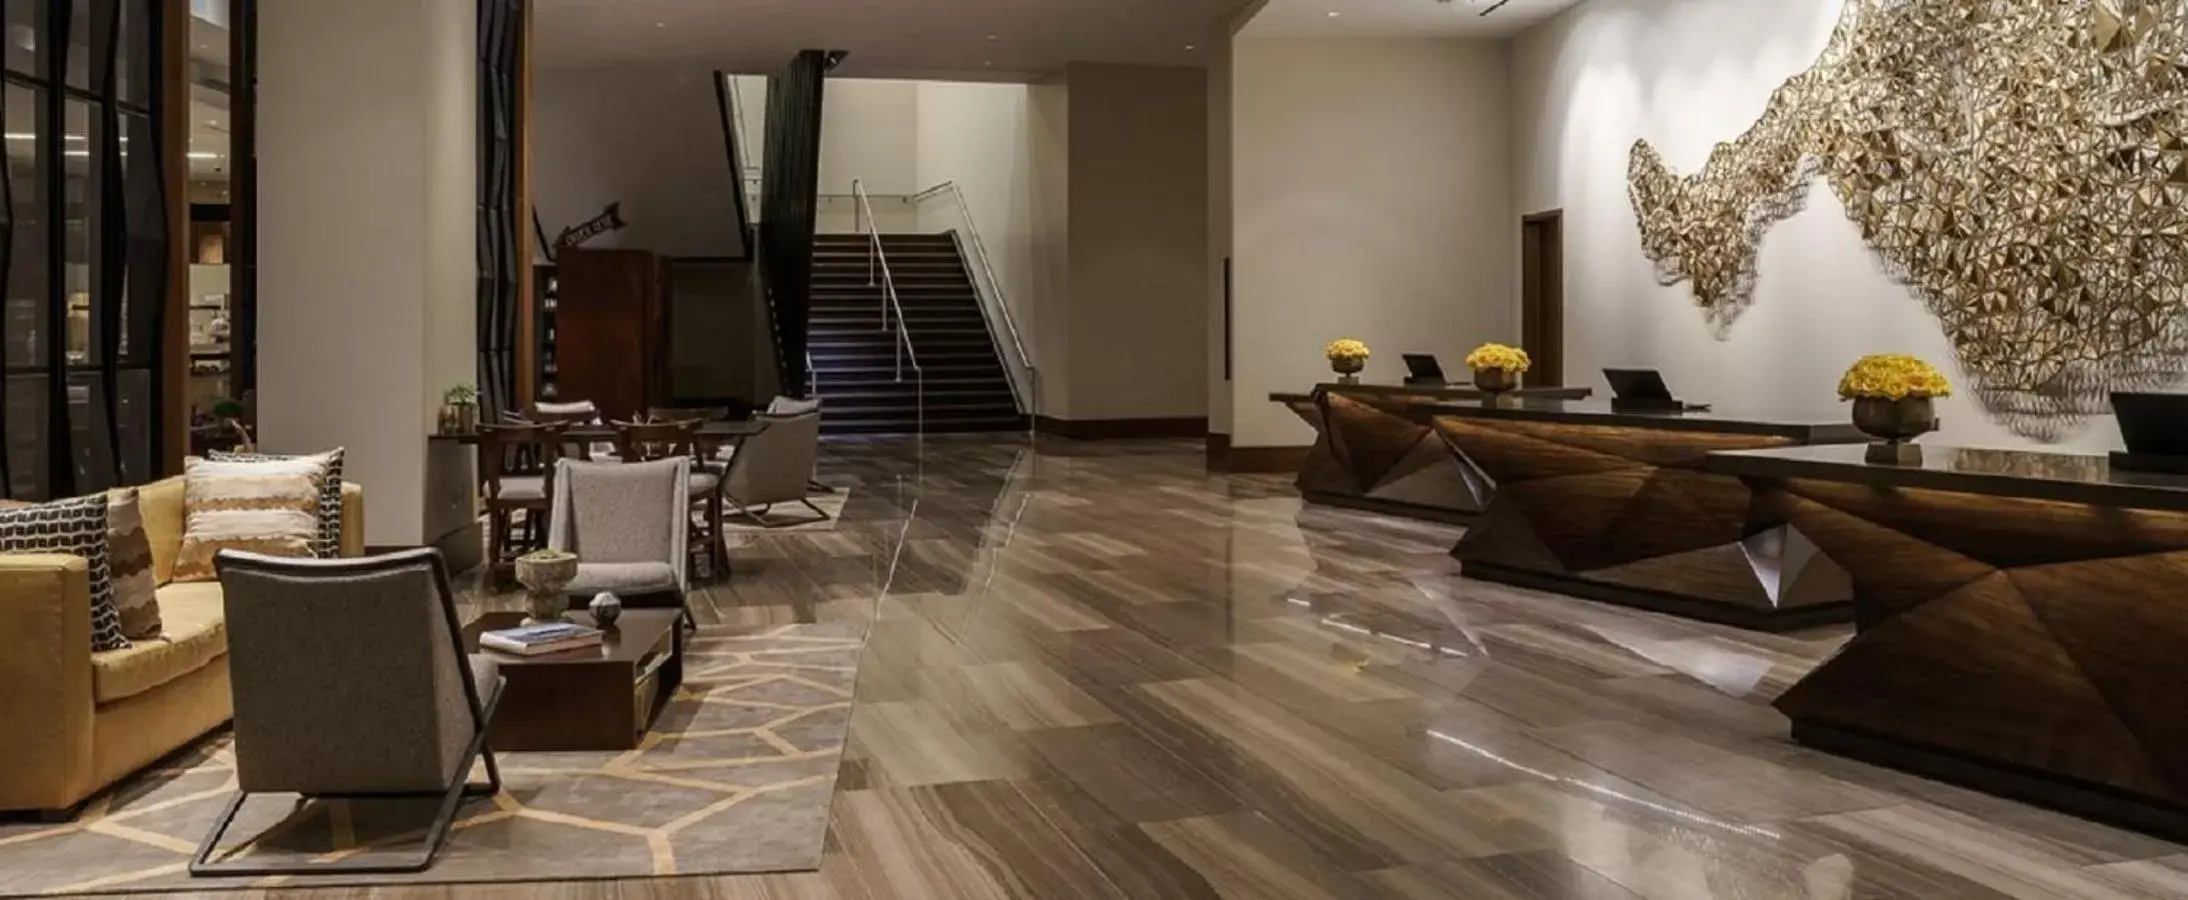 Lobby or reception, Restaurant/Places to Eat in Hyatt Regency Houston Galleria